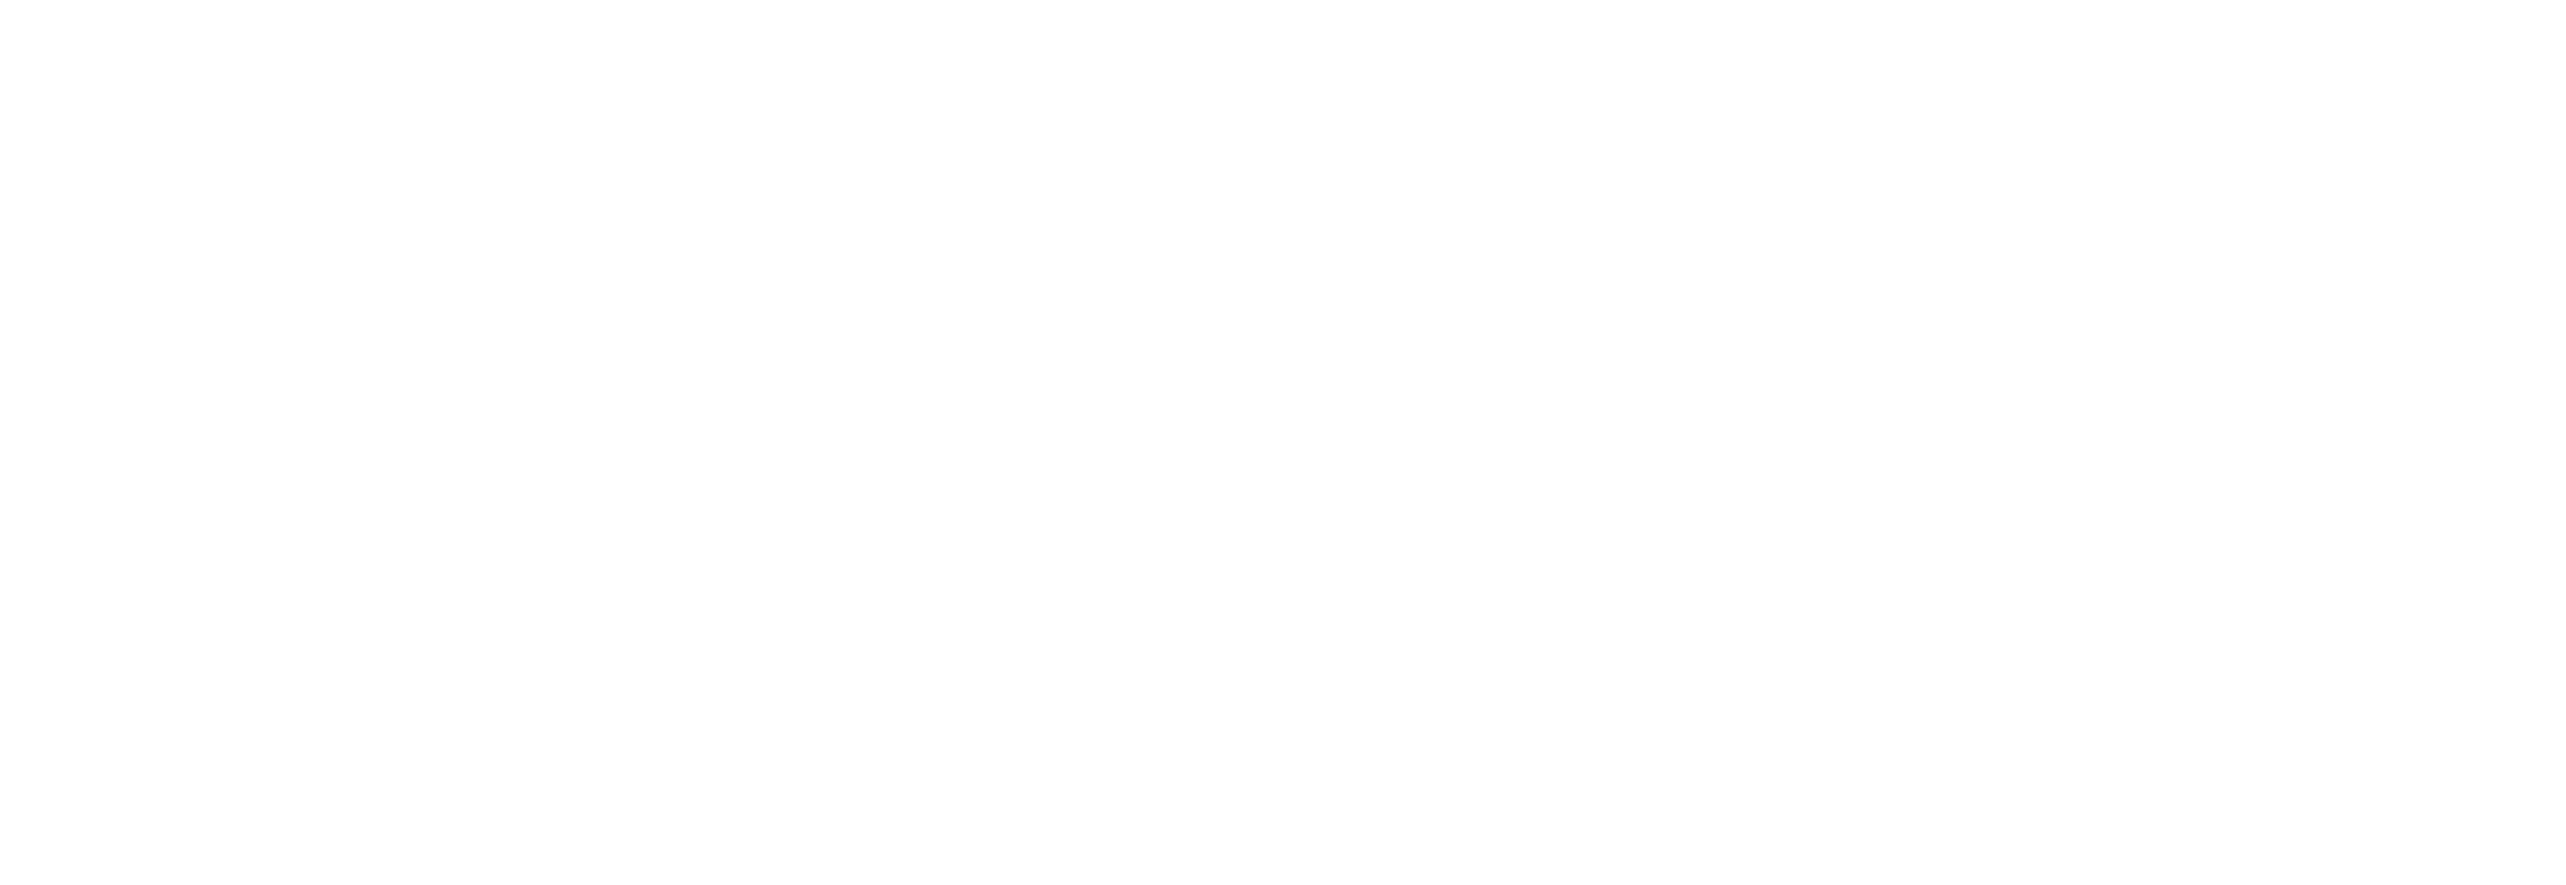 eCarga Logo